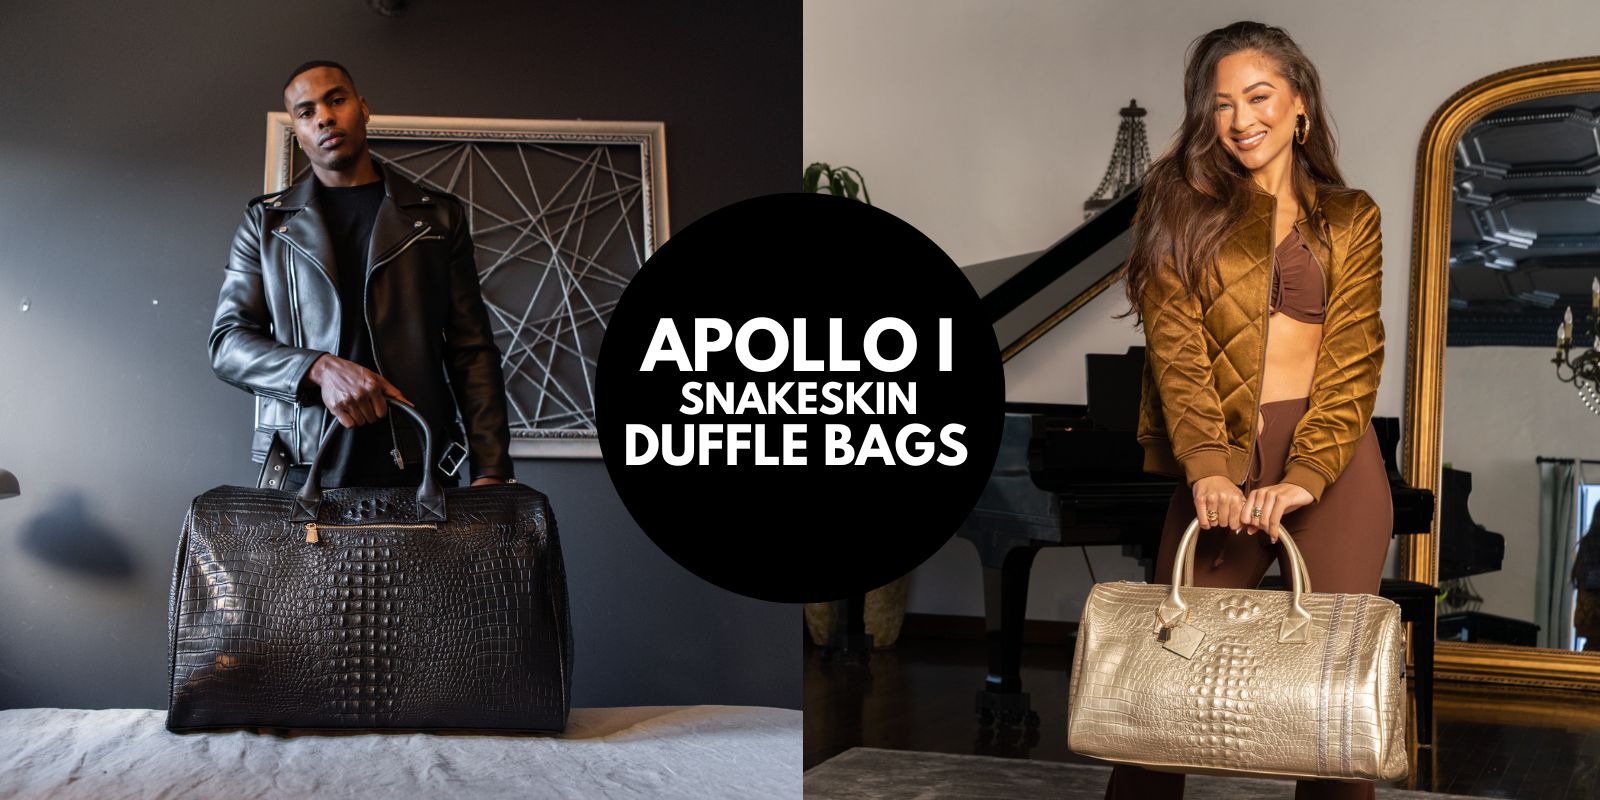 Apollo 2 Duffle Bags